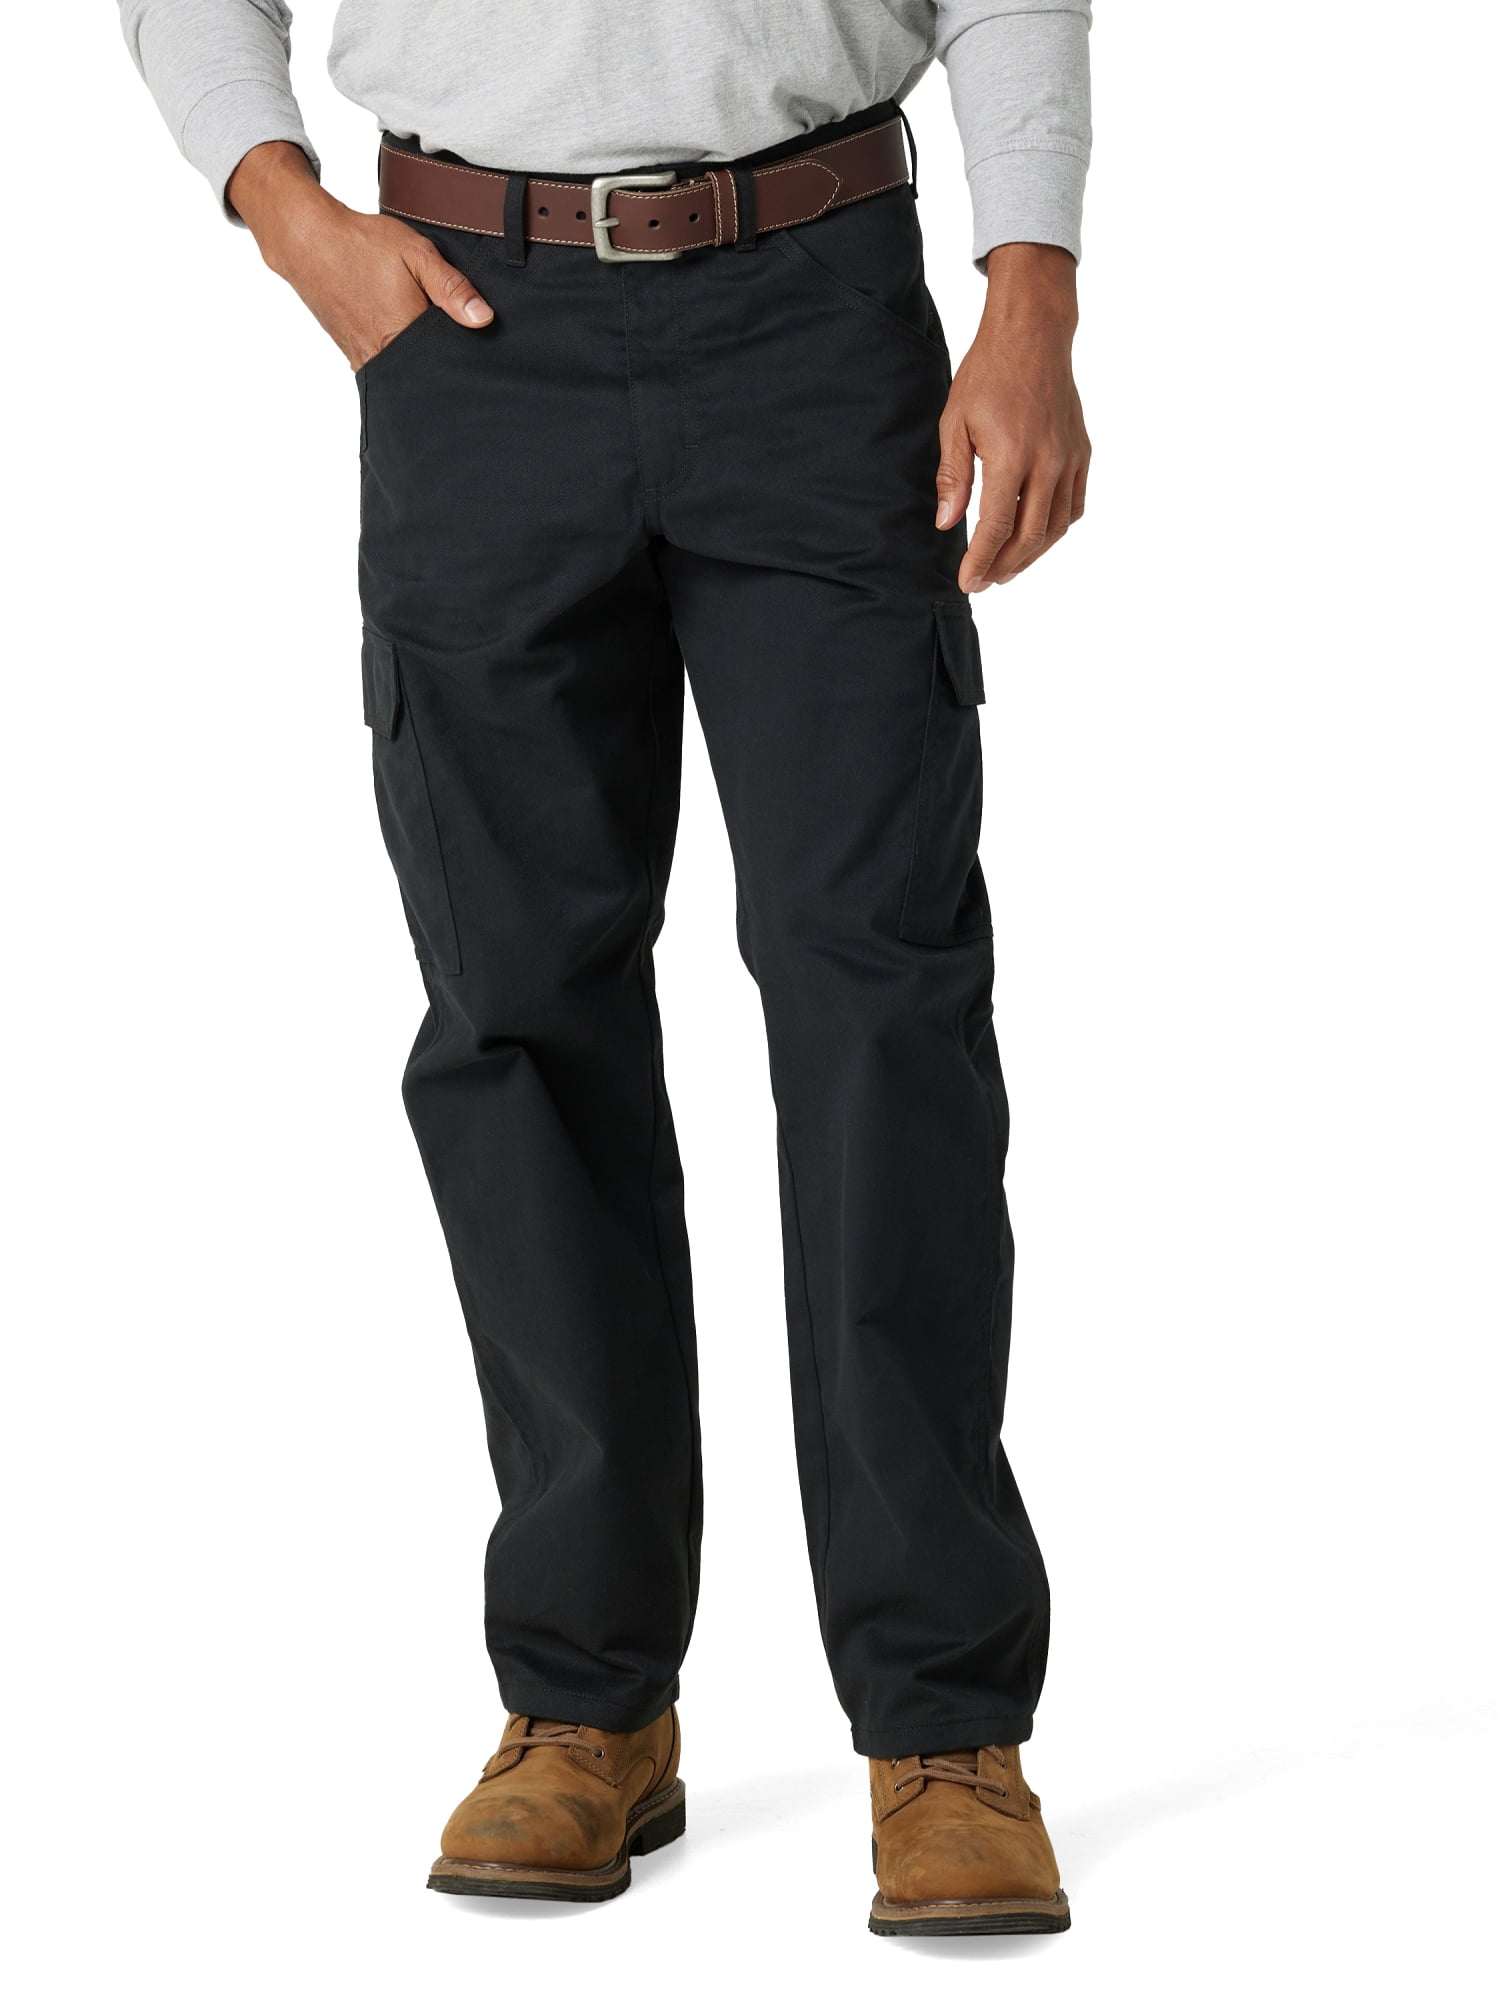 Men's Wrangler Workwear Cargo Pant, Sizes 32-44 